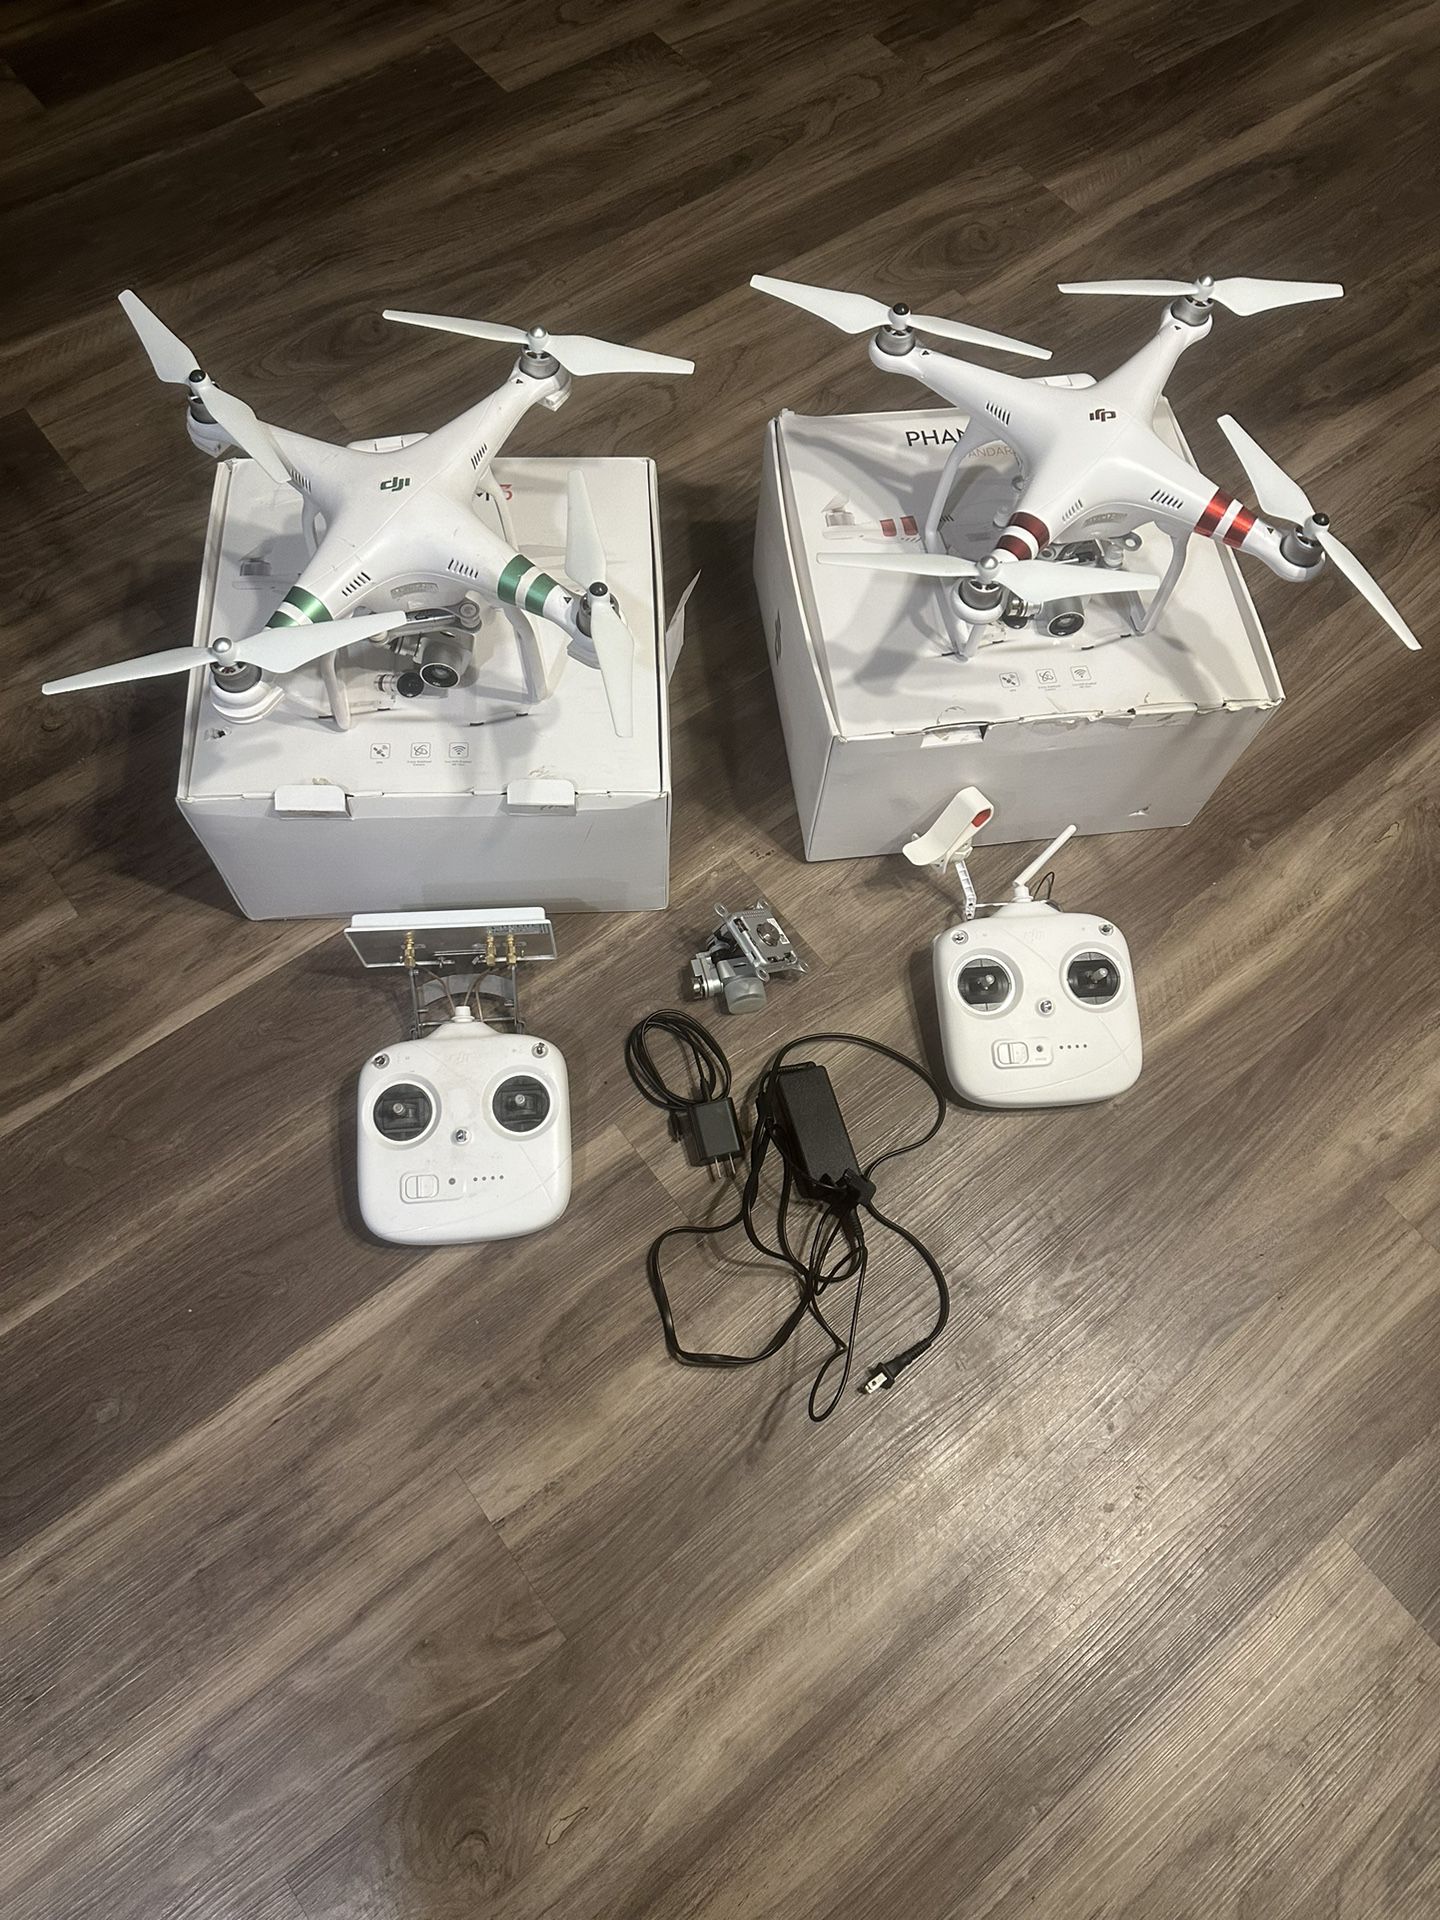 2 Dji Phantom 3 Drones 